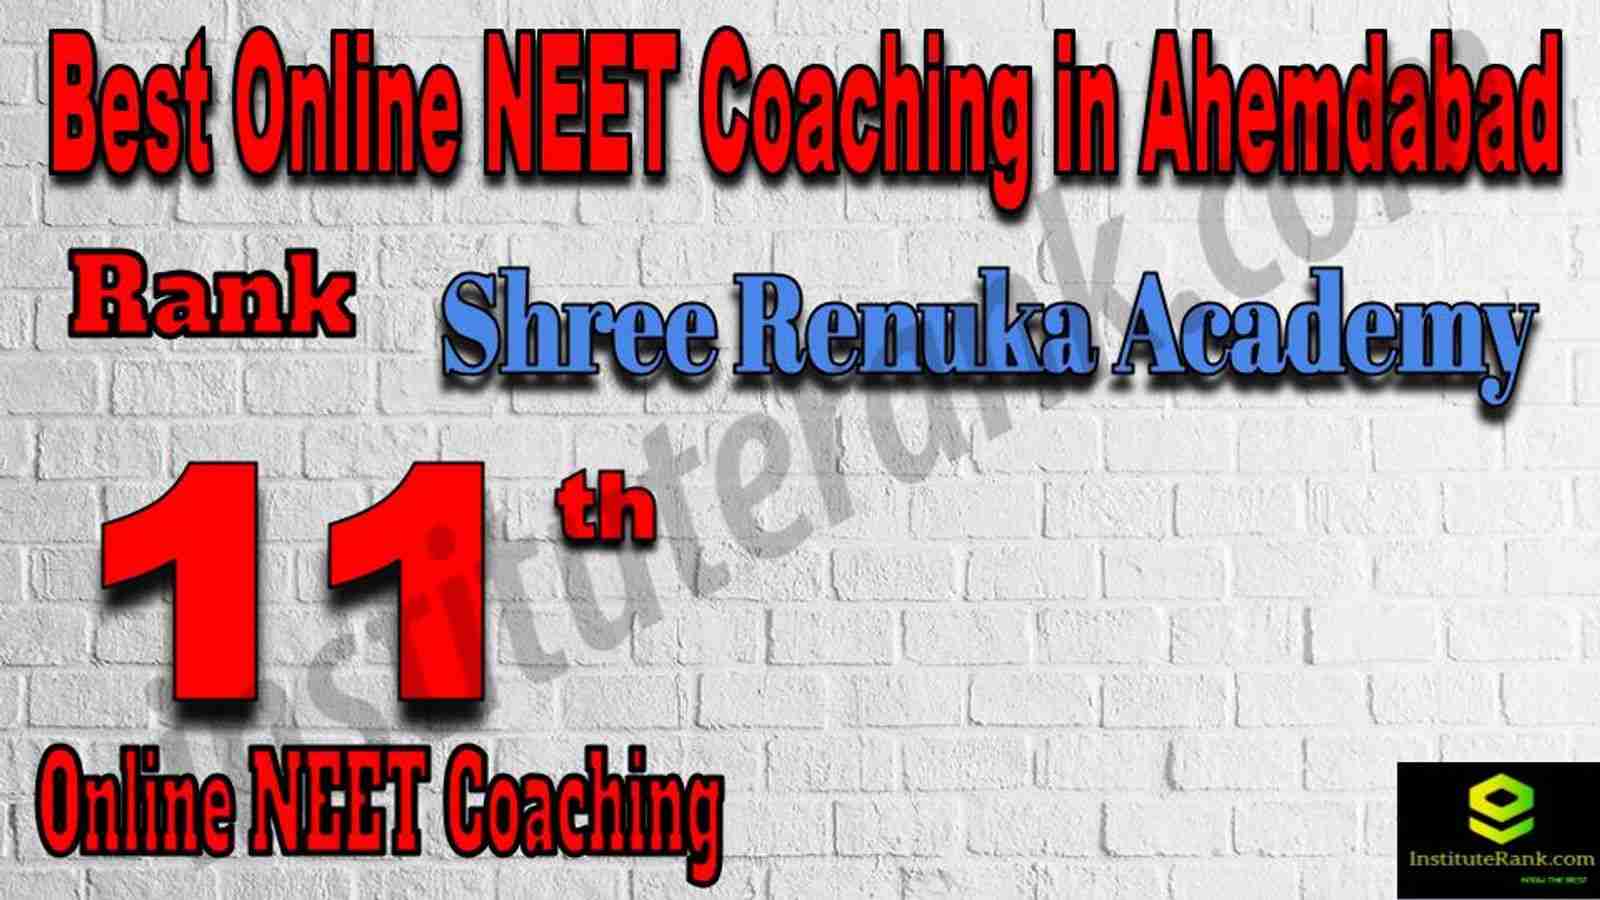 Rank 11 Best Online NEET Coaching in Ahmedabad